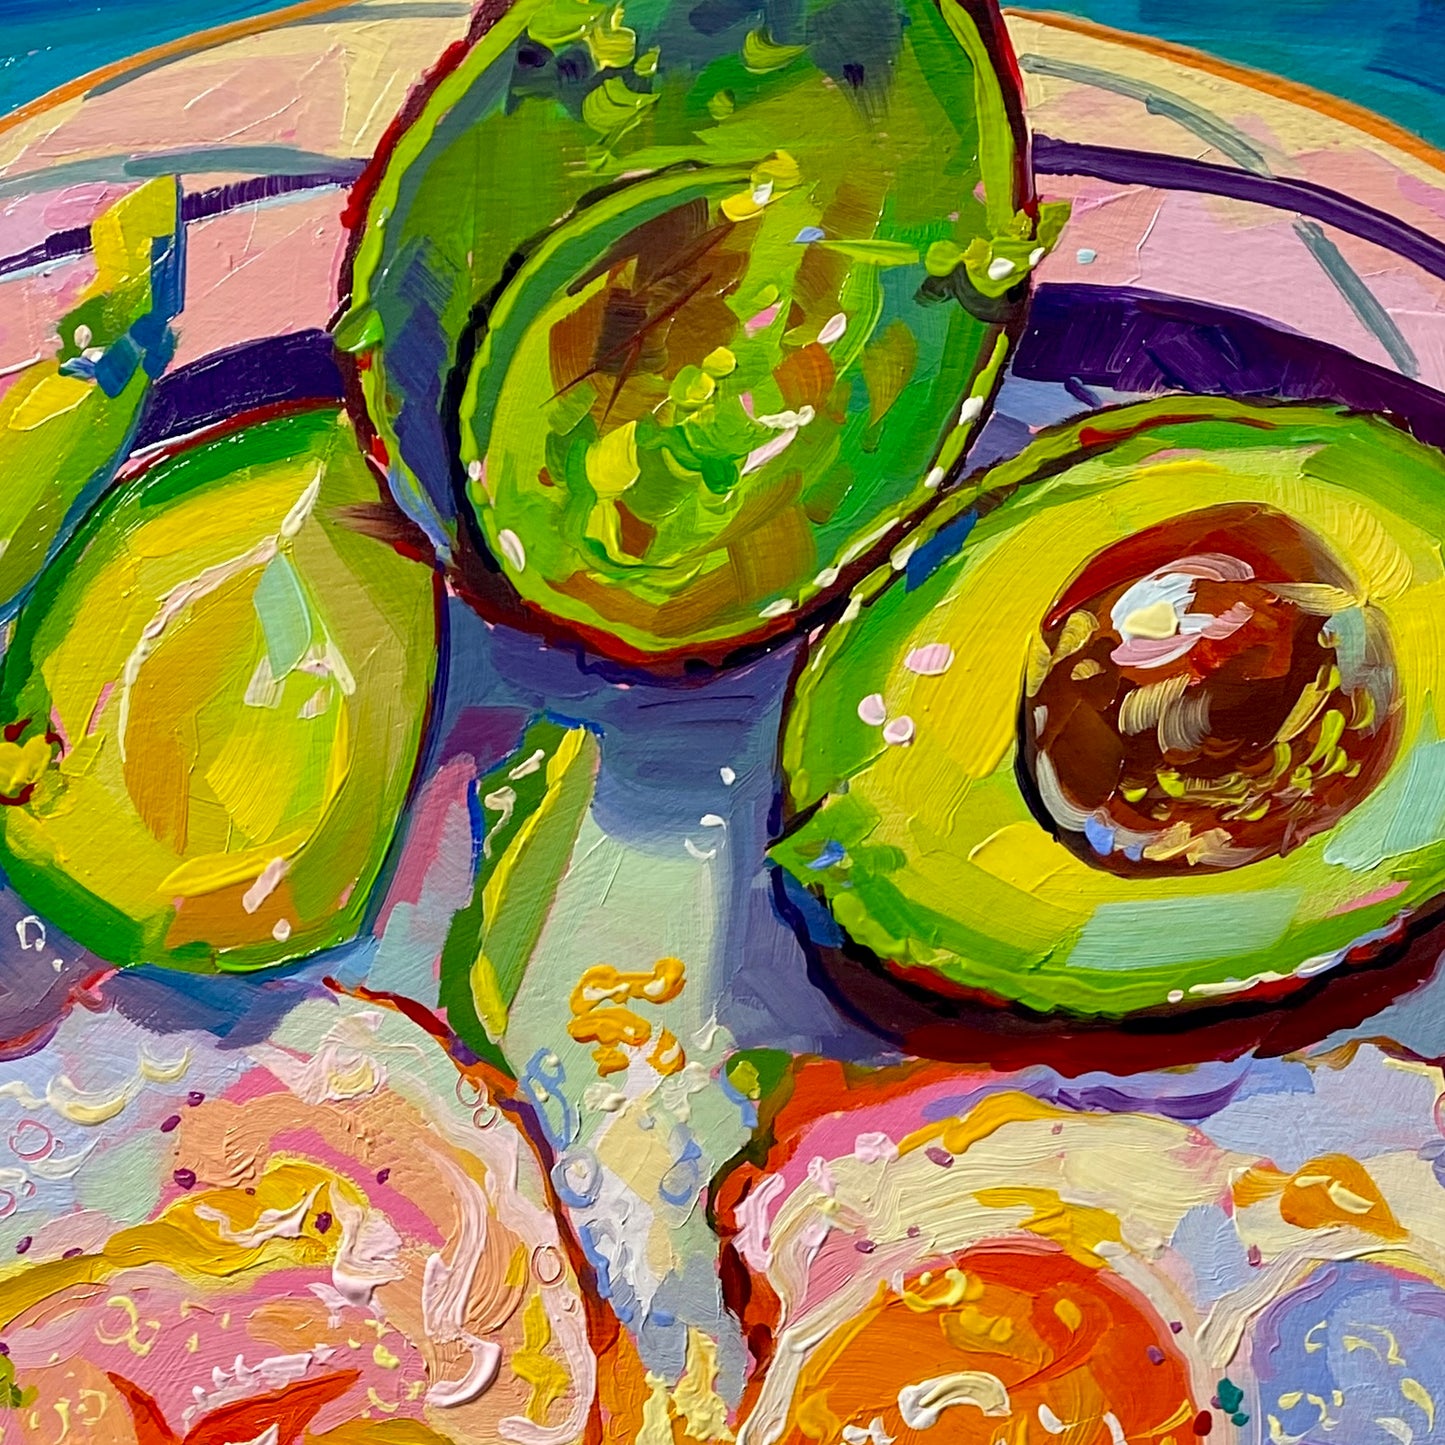 Avocado and egg plate - Original Oil Painting